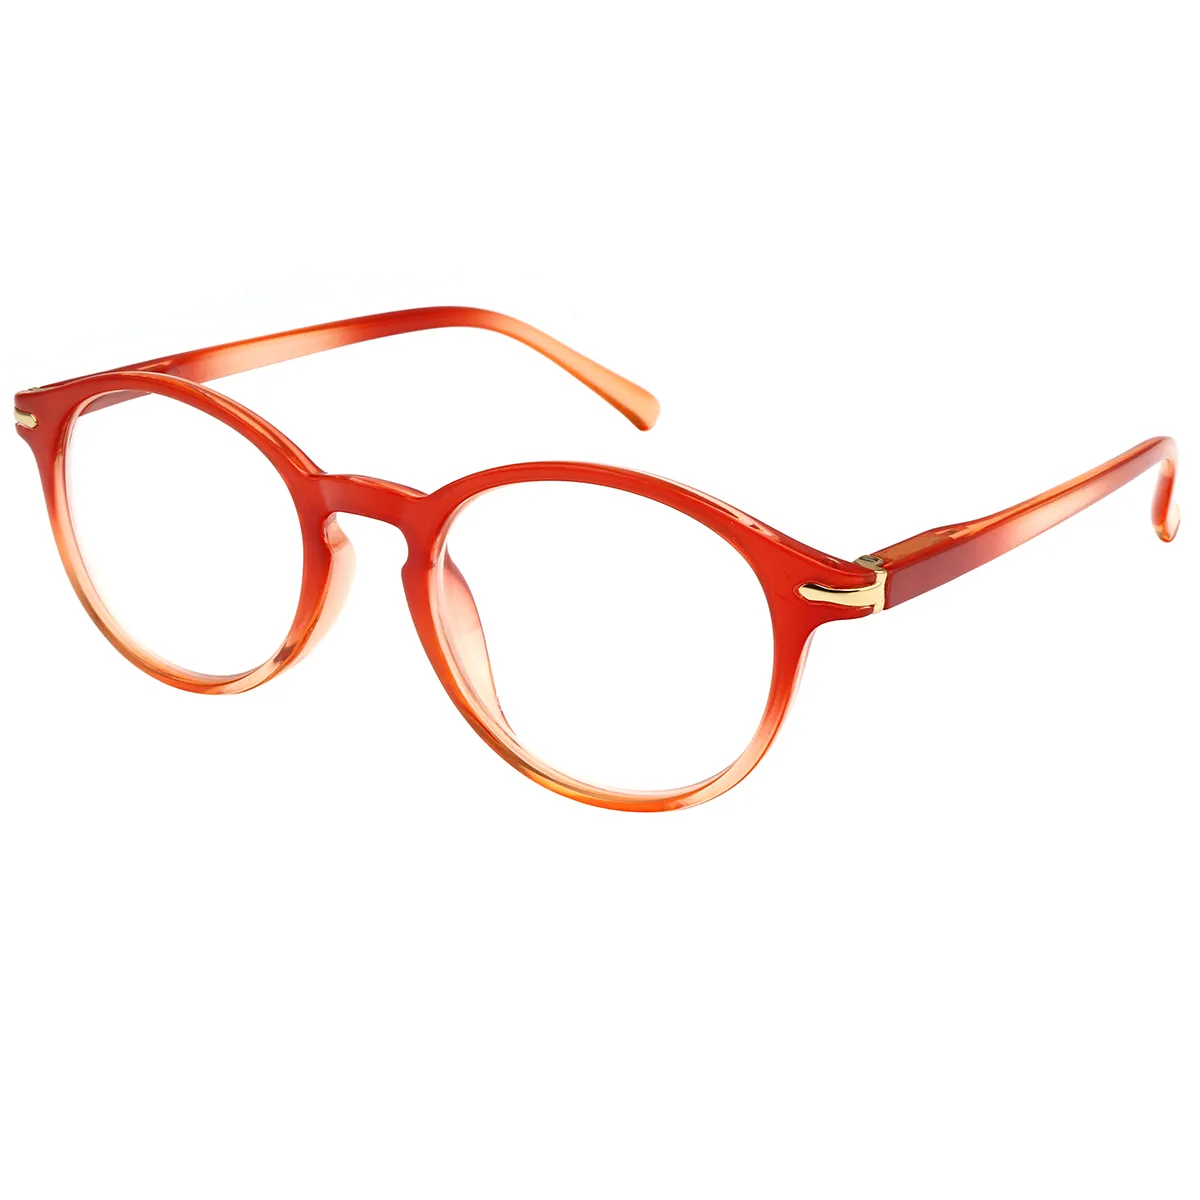 Classic Oval Orange Reading Glasses for Women